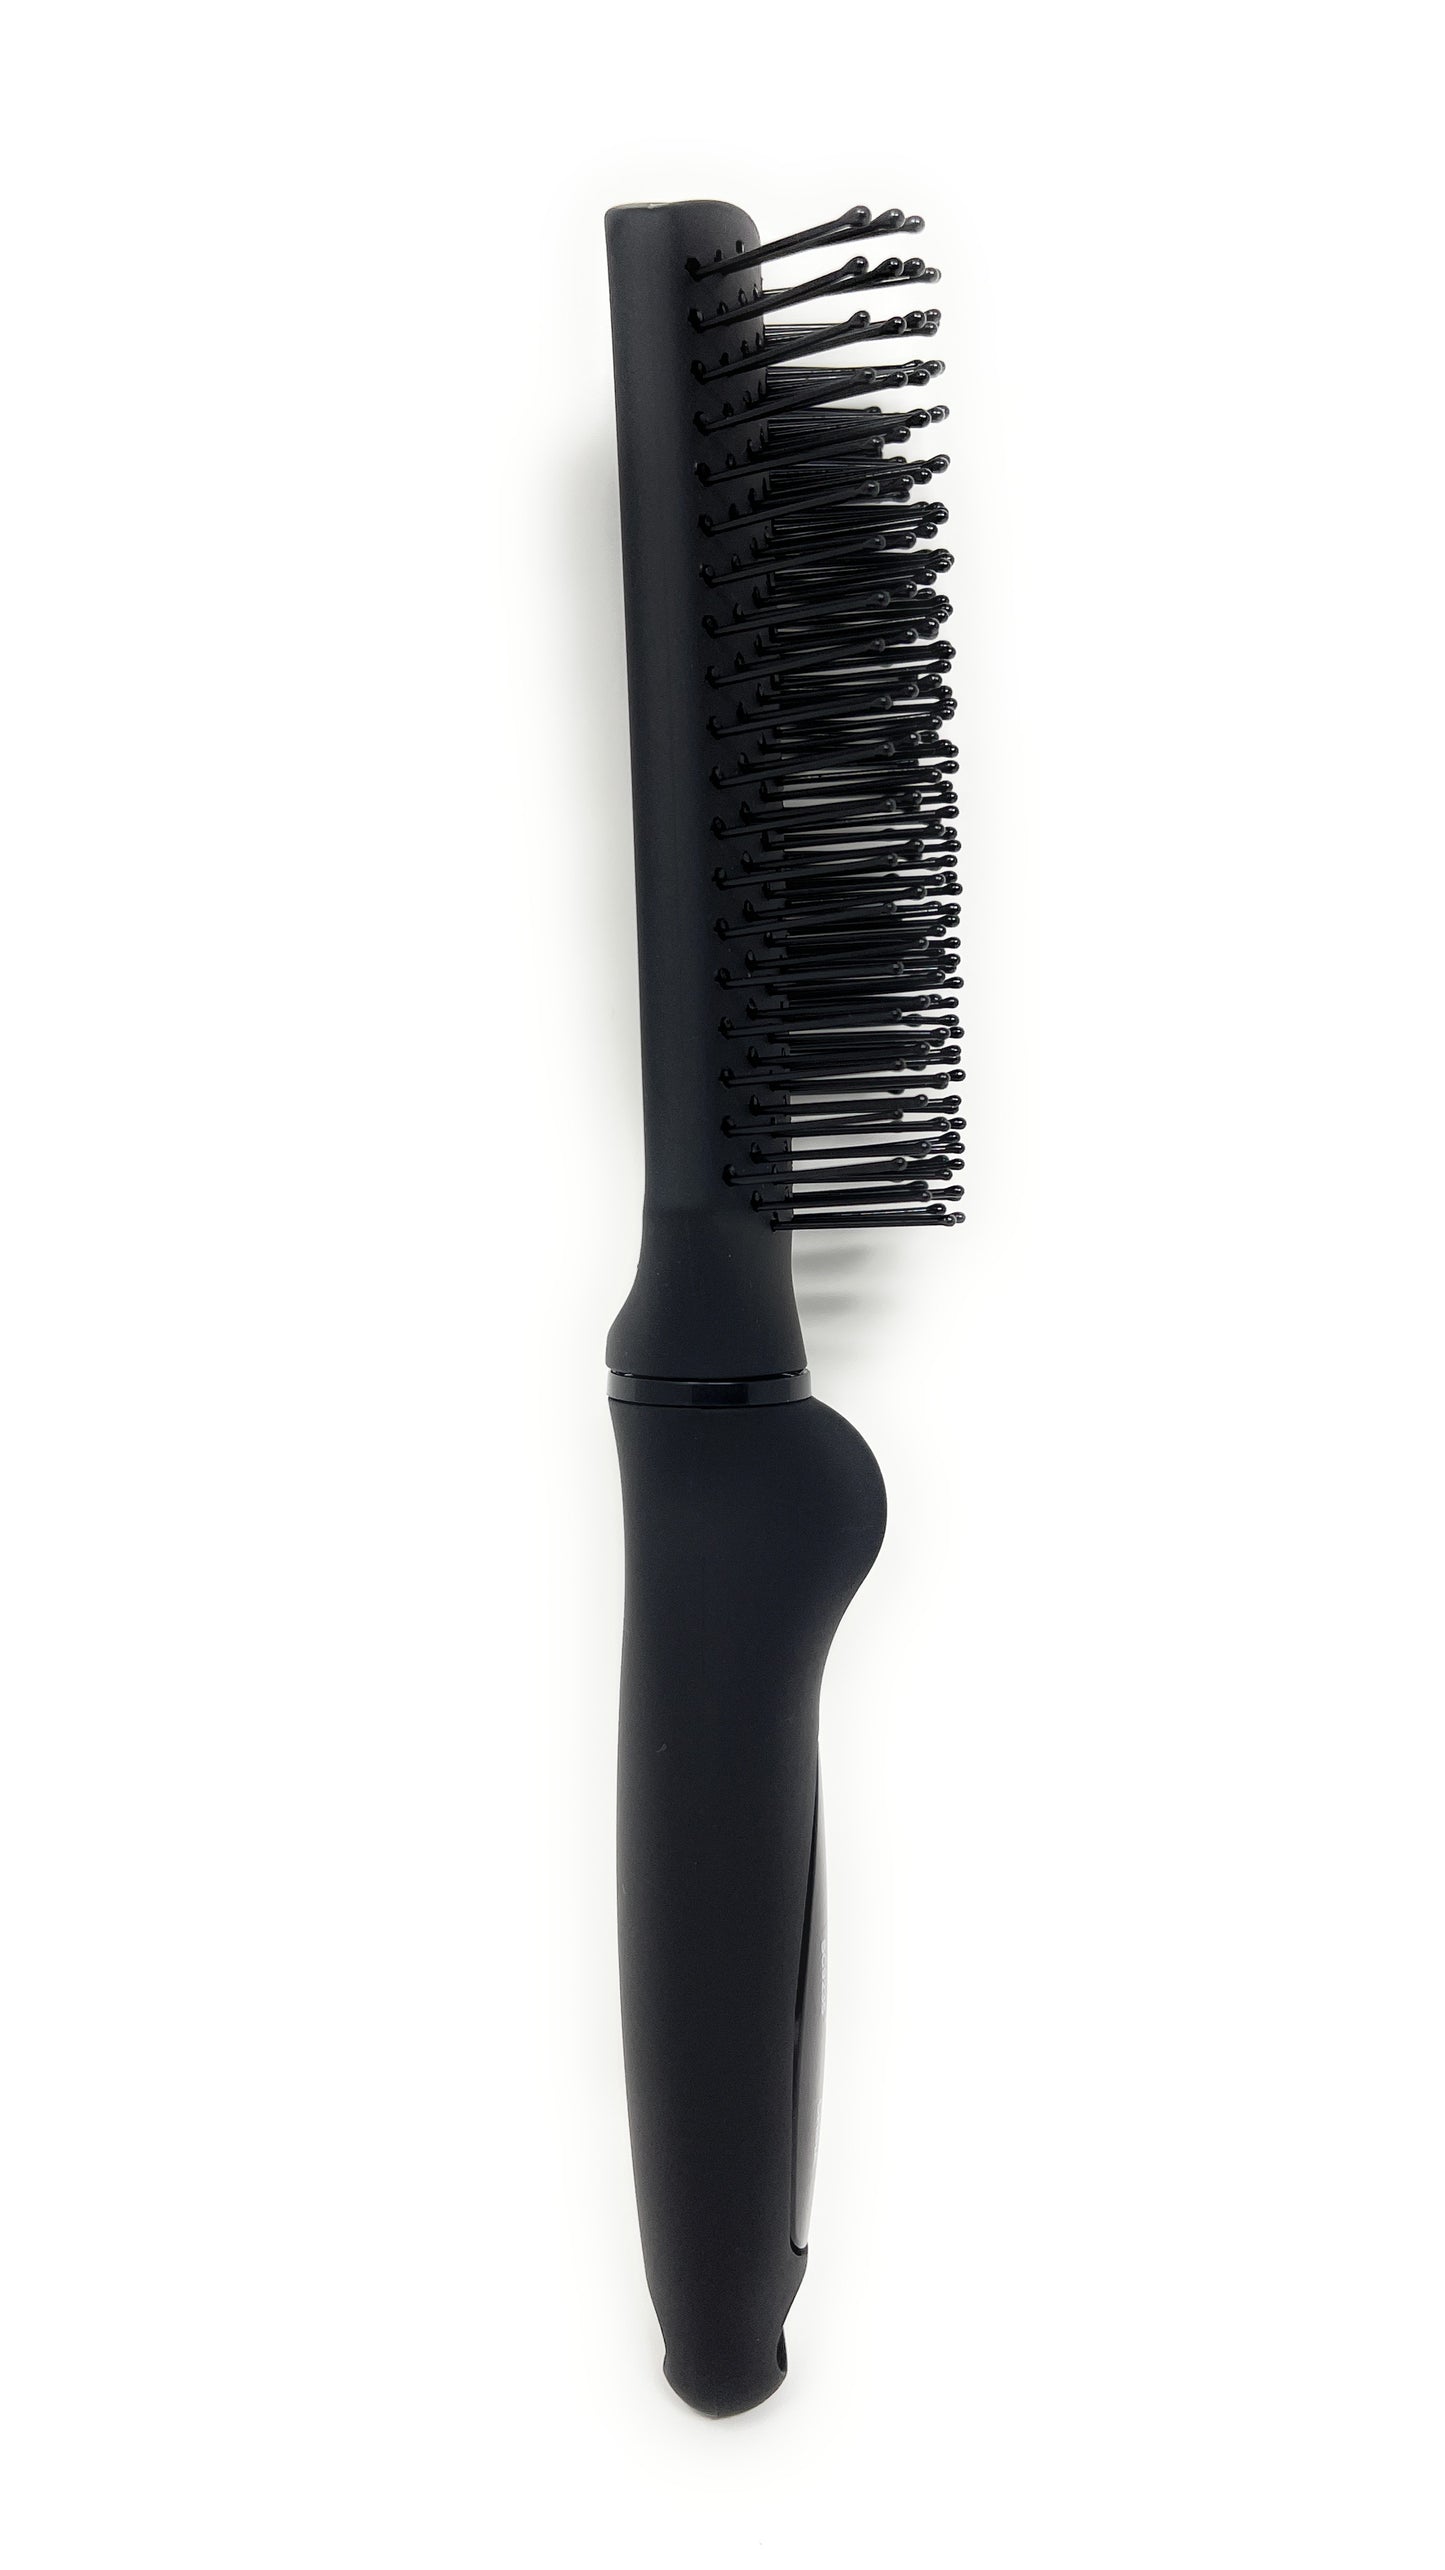 Scalpmaster 9-Row Styling Hair Brush Light Ball-Tipped Nylon Bristles Rich Black Rubberized Finish, Black. 1 Pc.